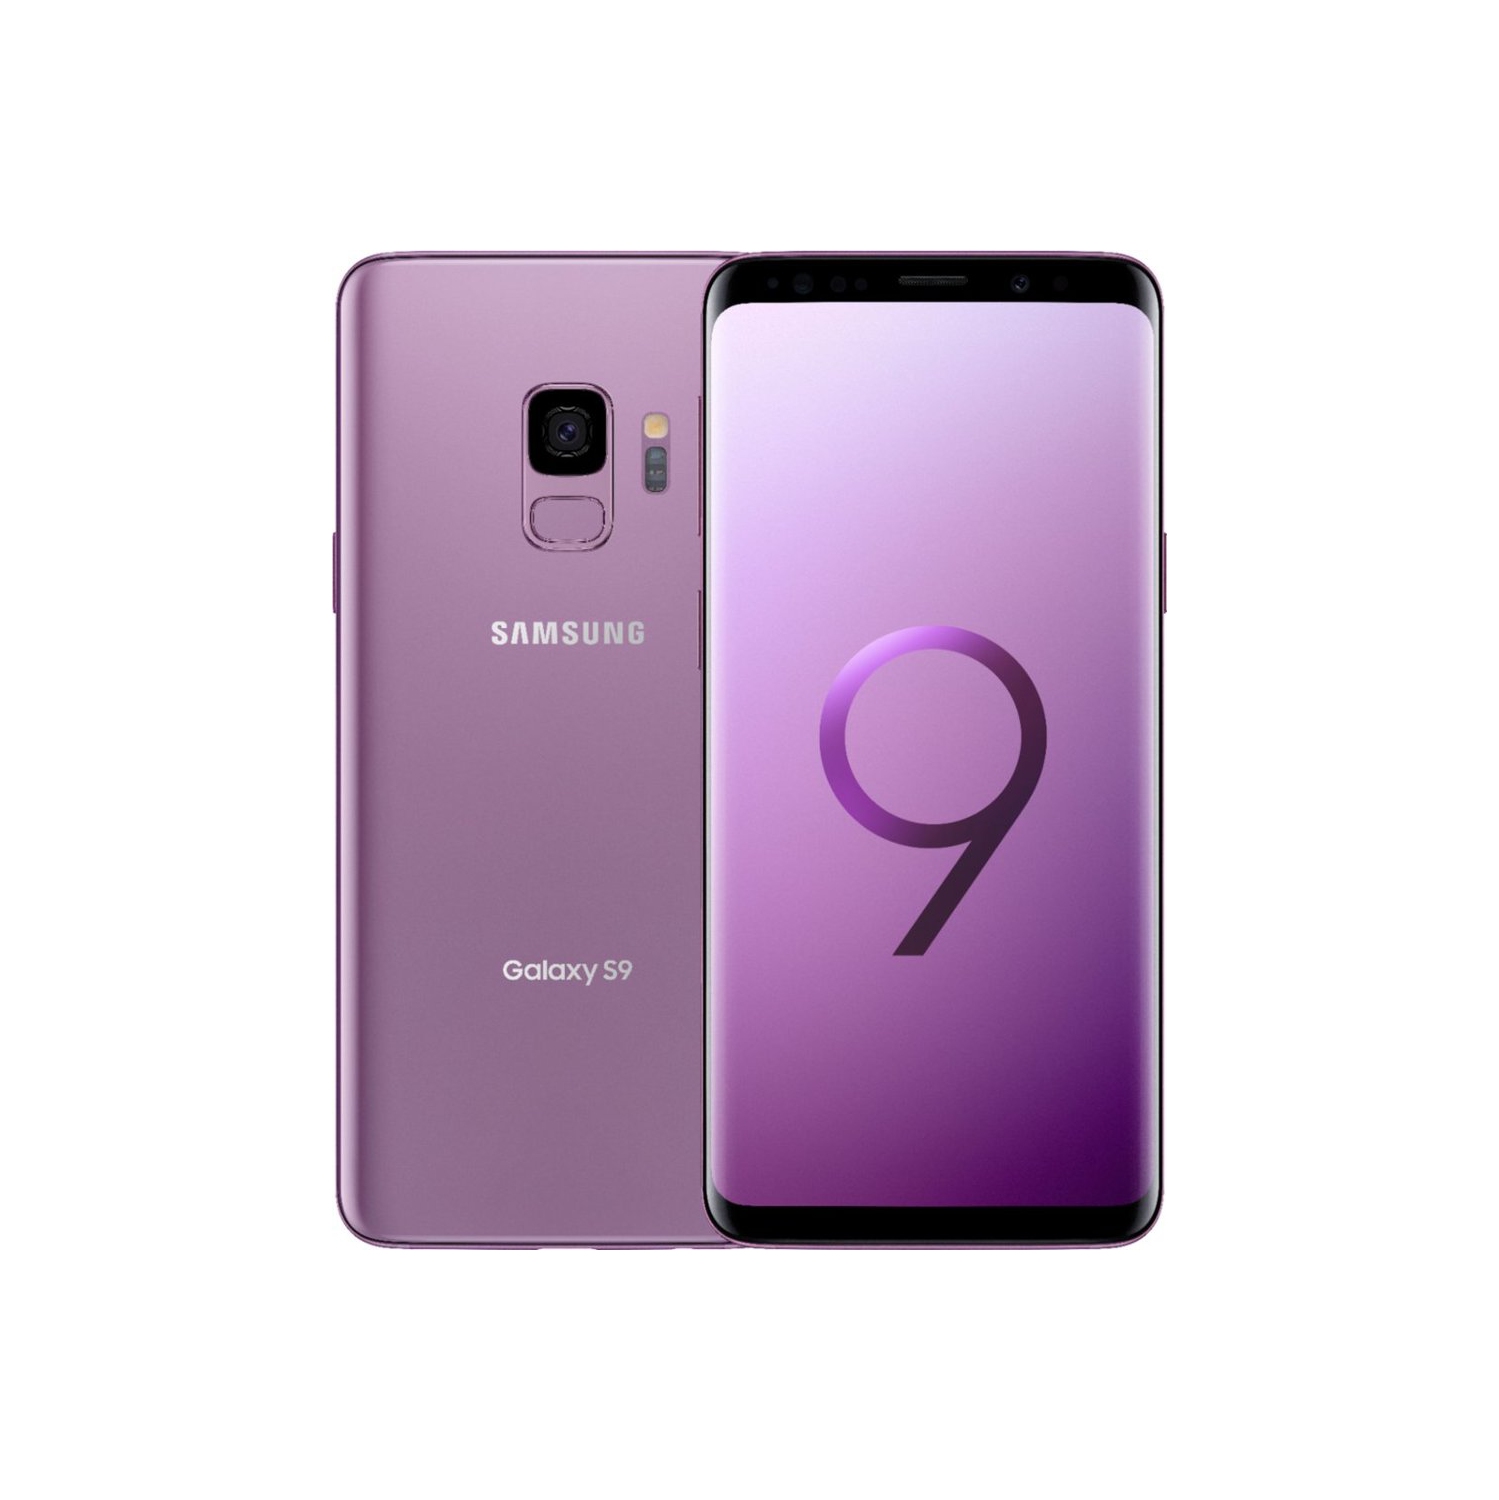 Refurbished (Good) - Samsung Galaxy S9 64GB Smartphone - Lilac Purple - Unlocked